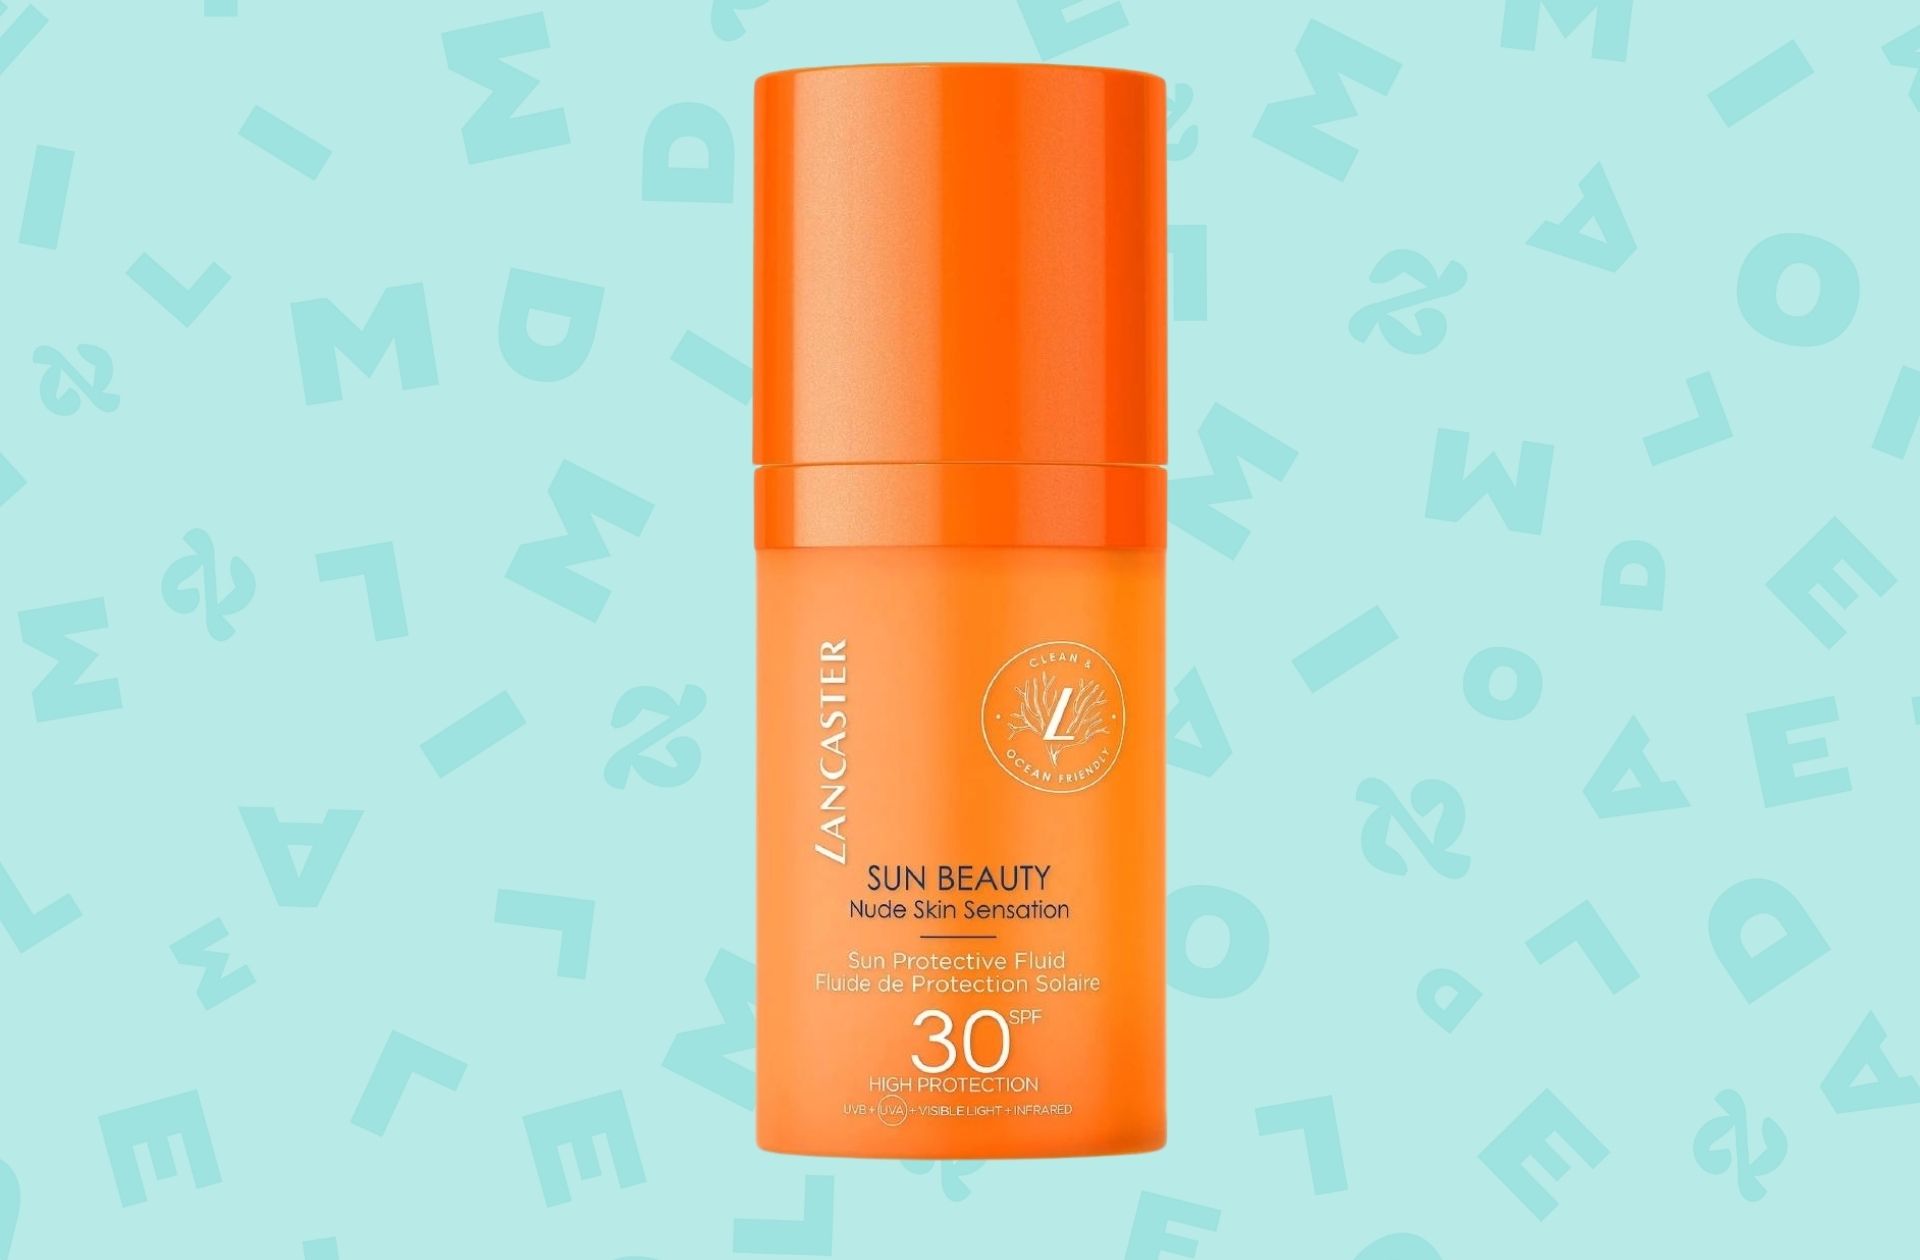 Fluide de protection solaire Sun Beauty Nude Skin Sensation SPF30 — Lancaster